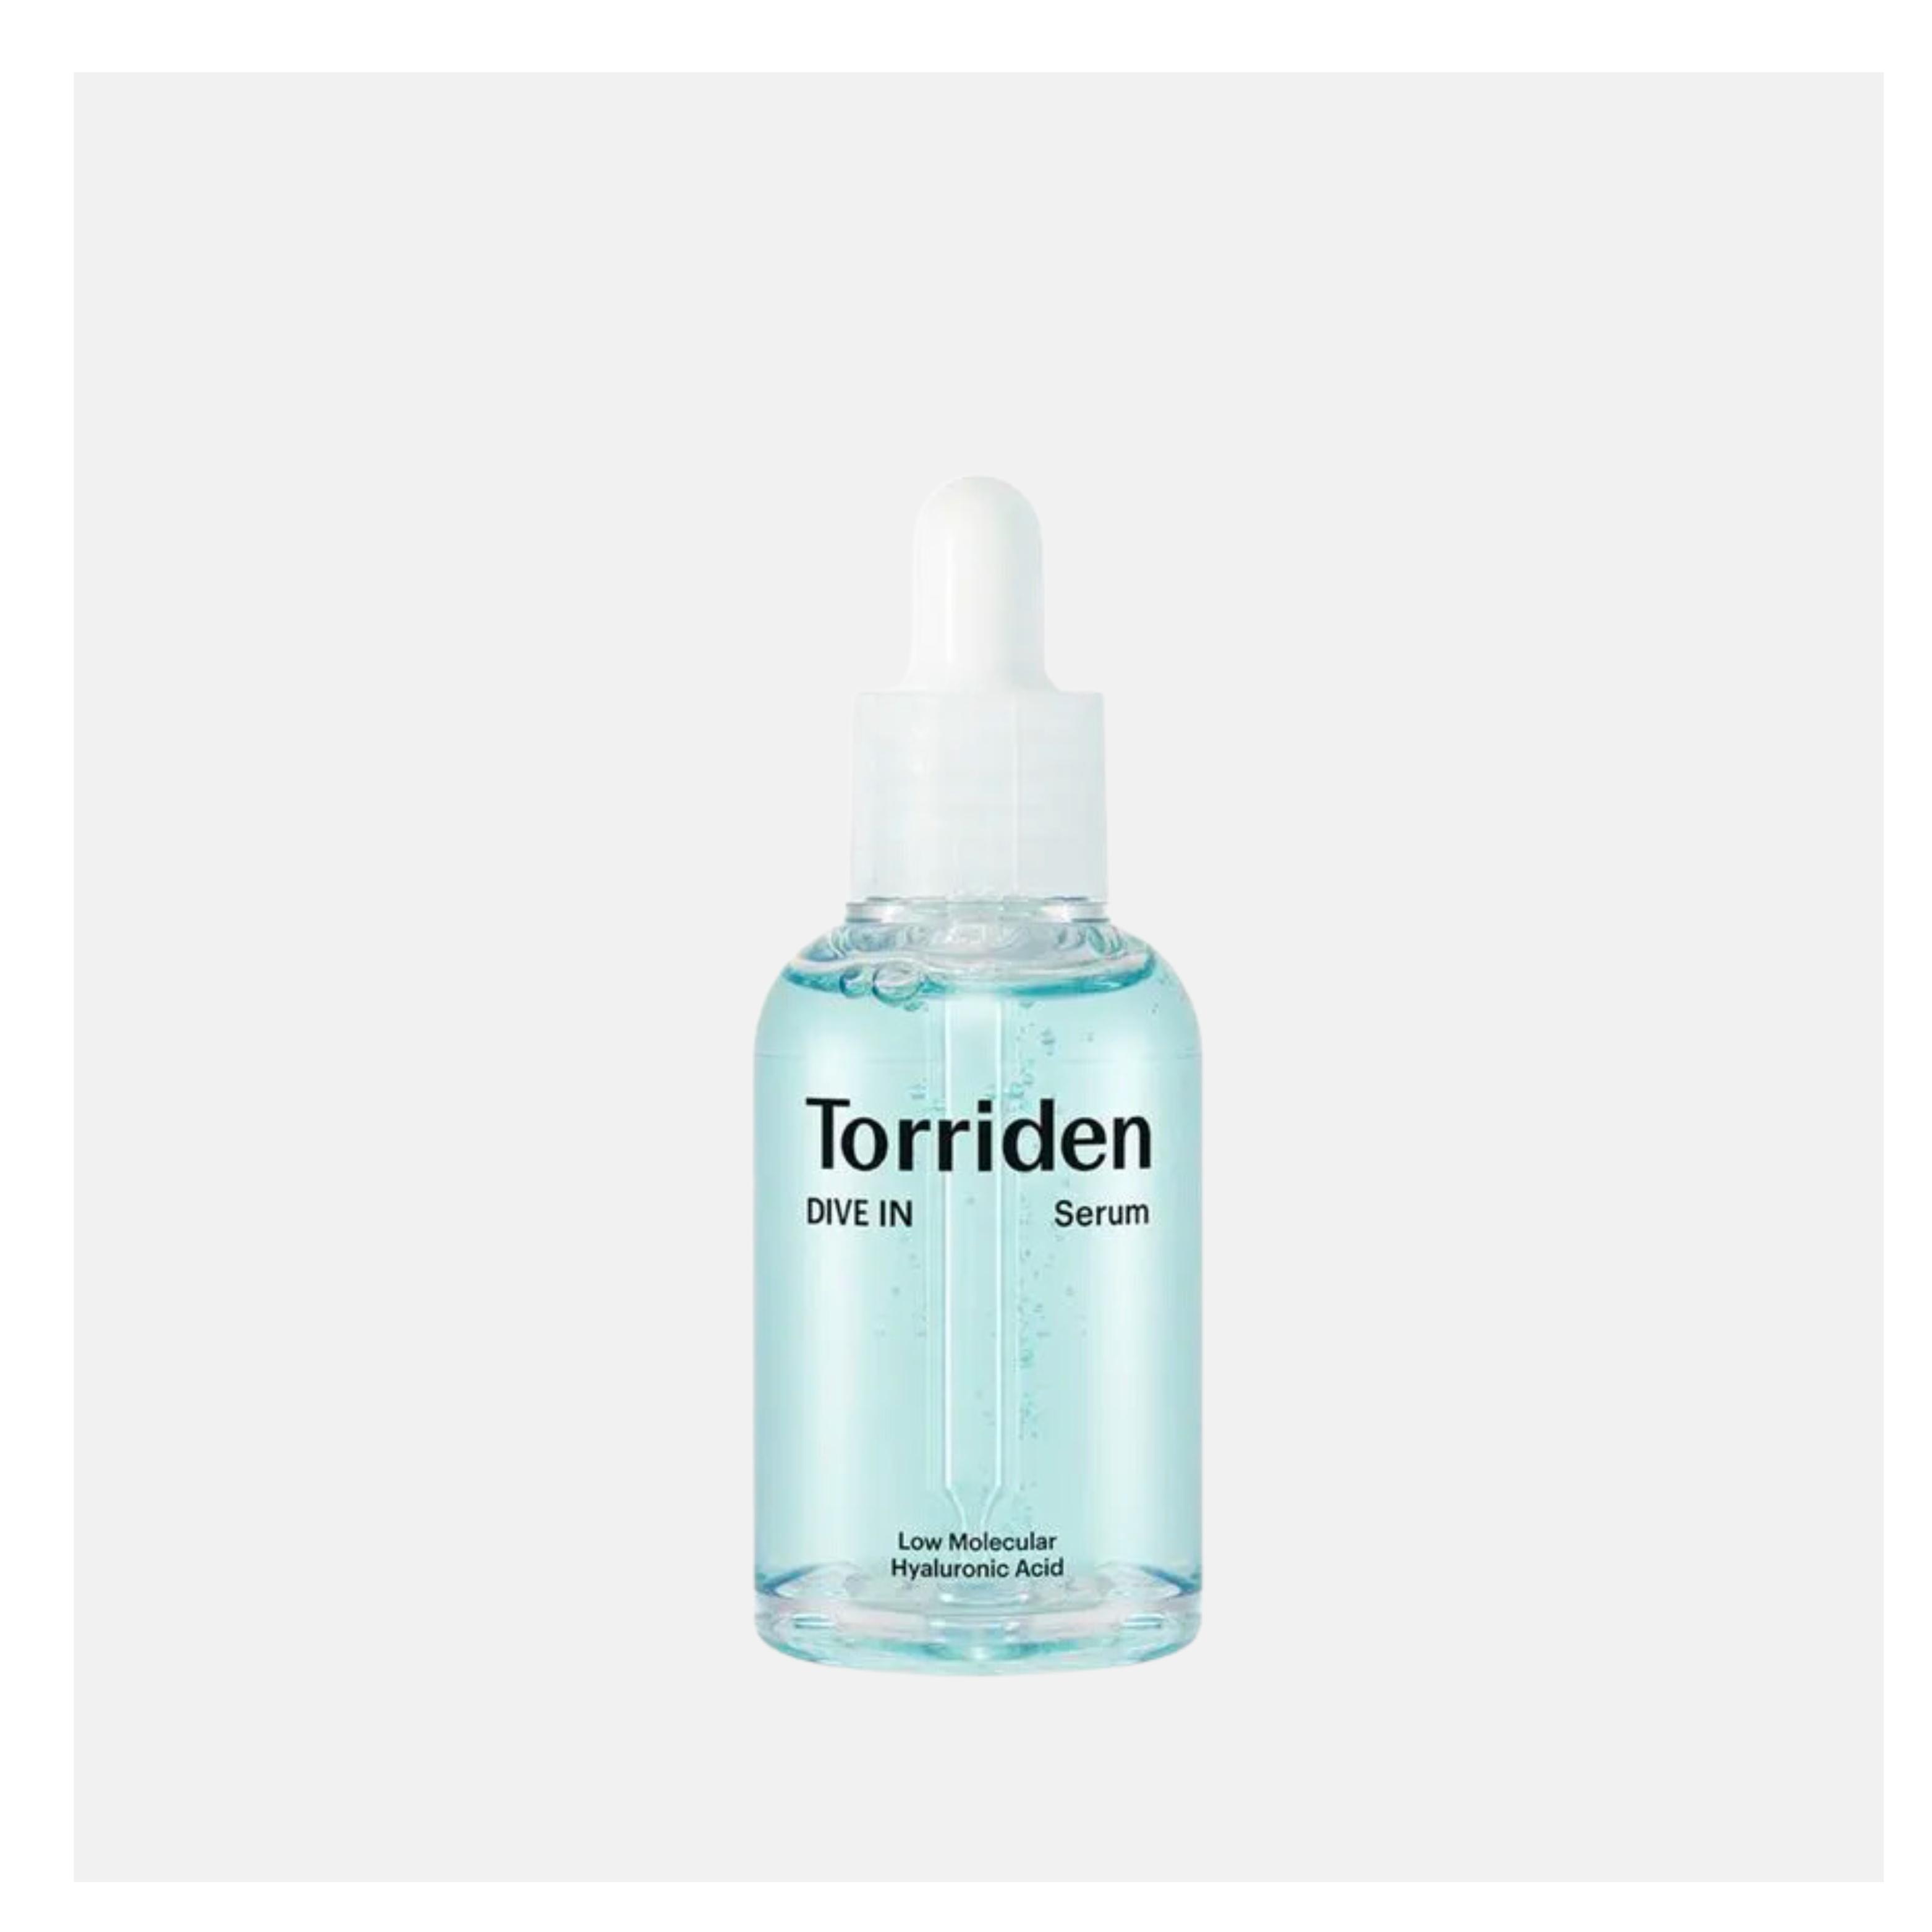 Torriden DIVE-IN Low Molecular Hyaluronic Acid Serum, 50ml